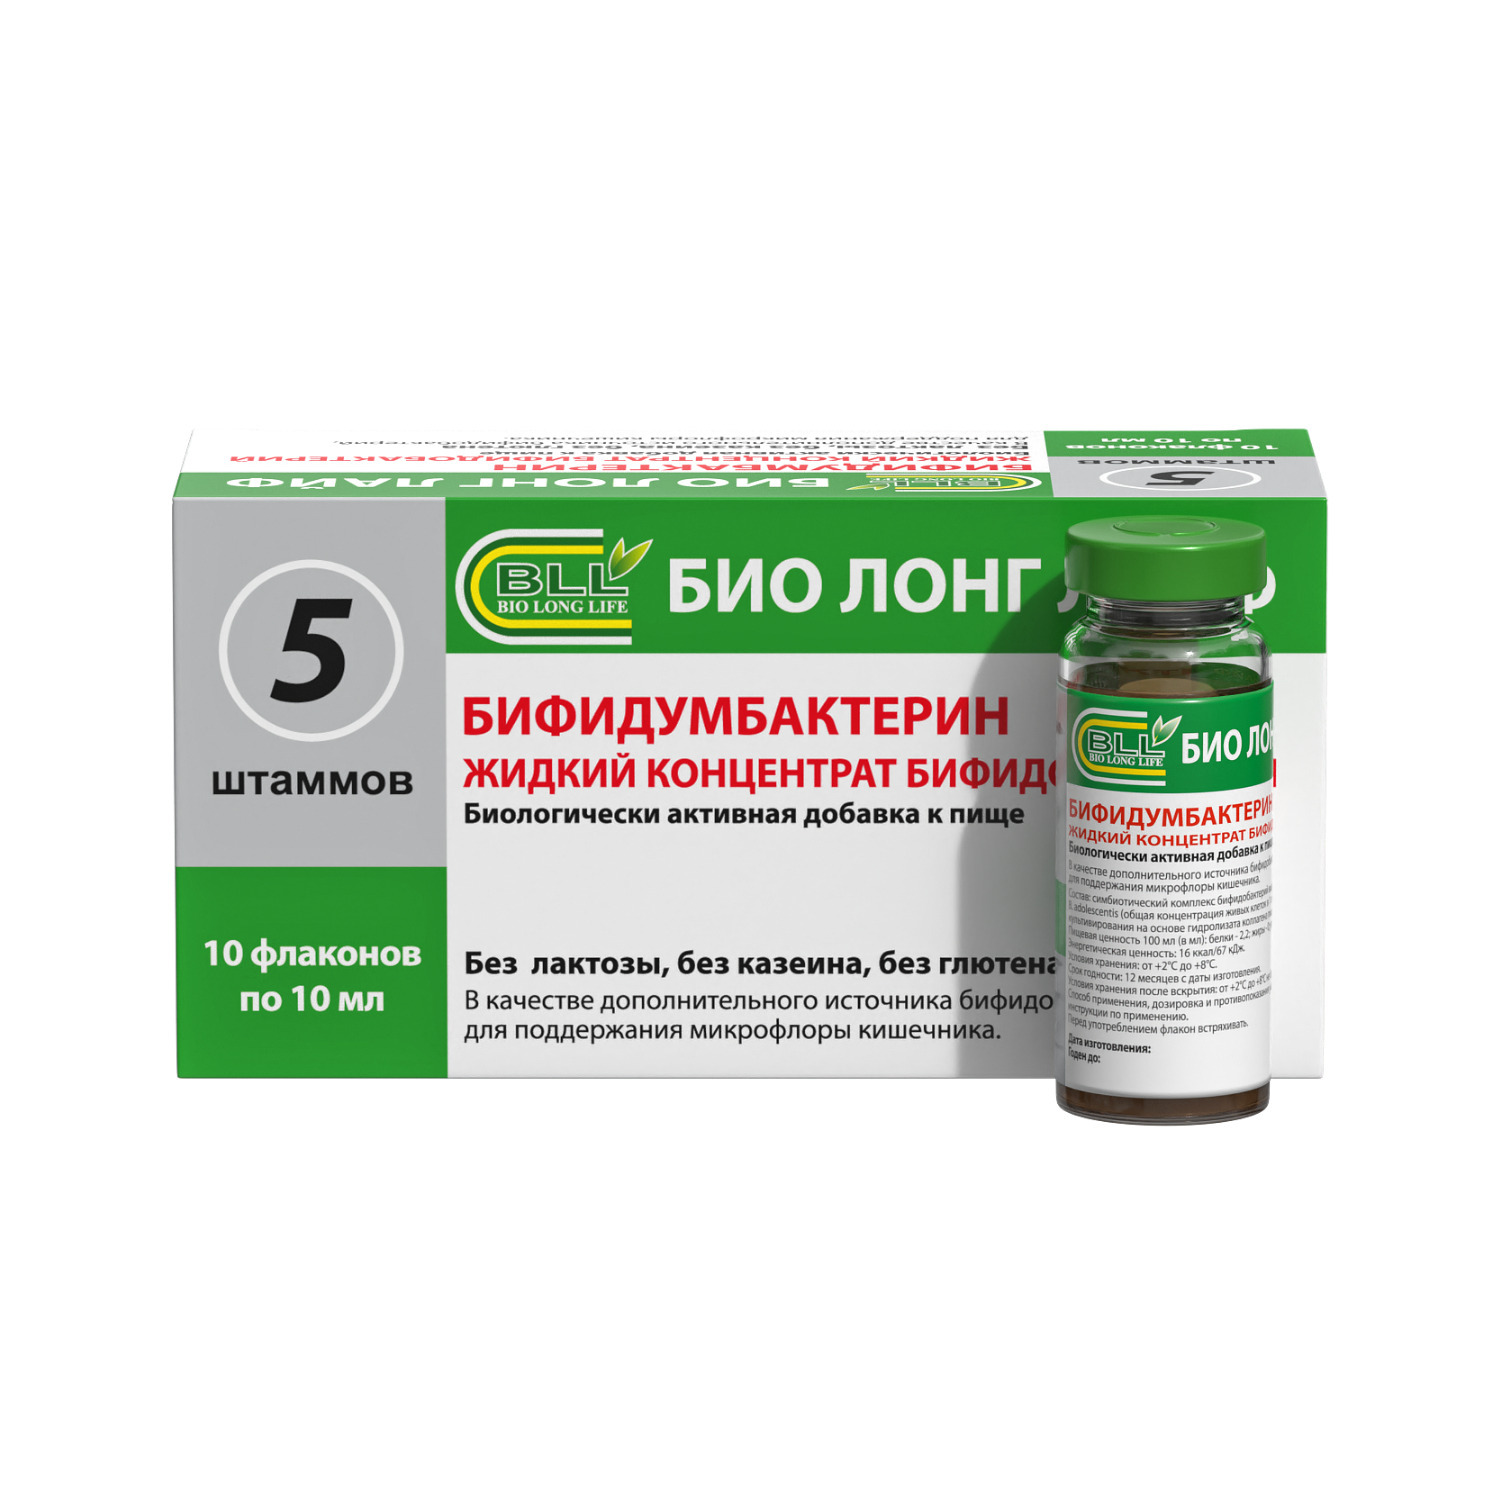 Бифидумбактерин (жидкий концентрат бифидобактерий) 10мл фл №10 от Budzdorov